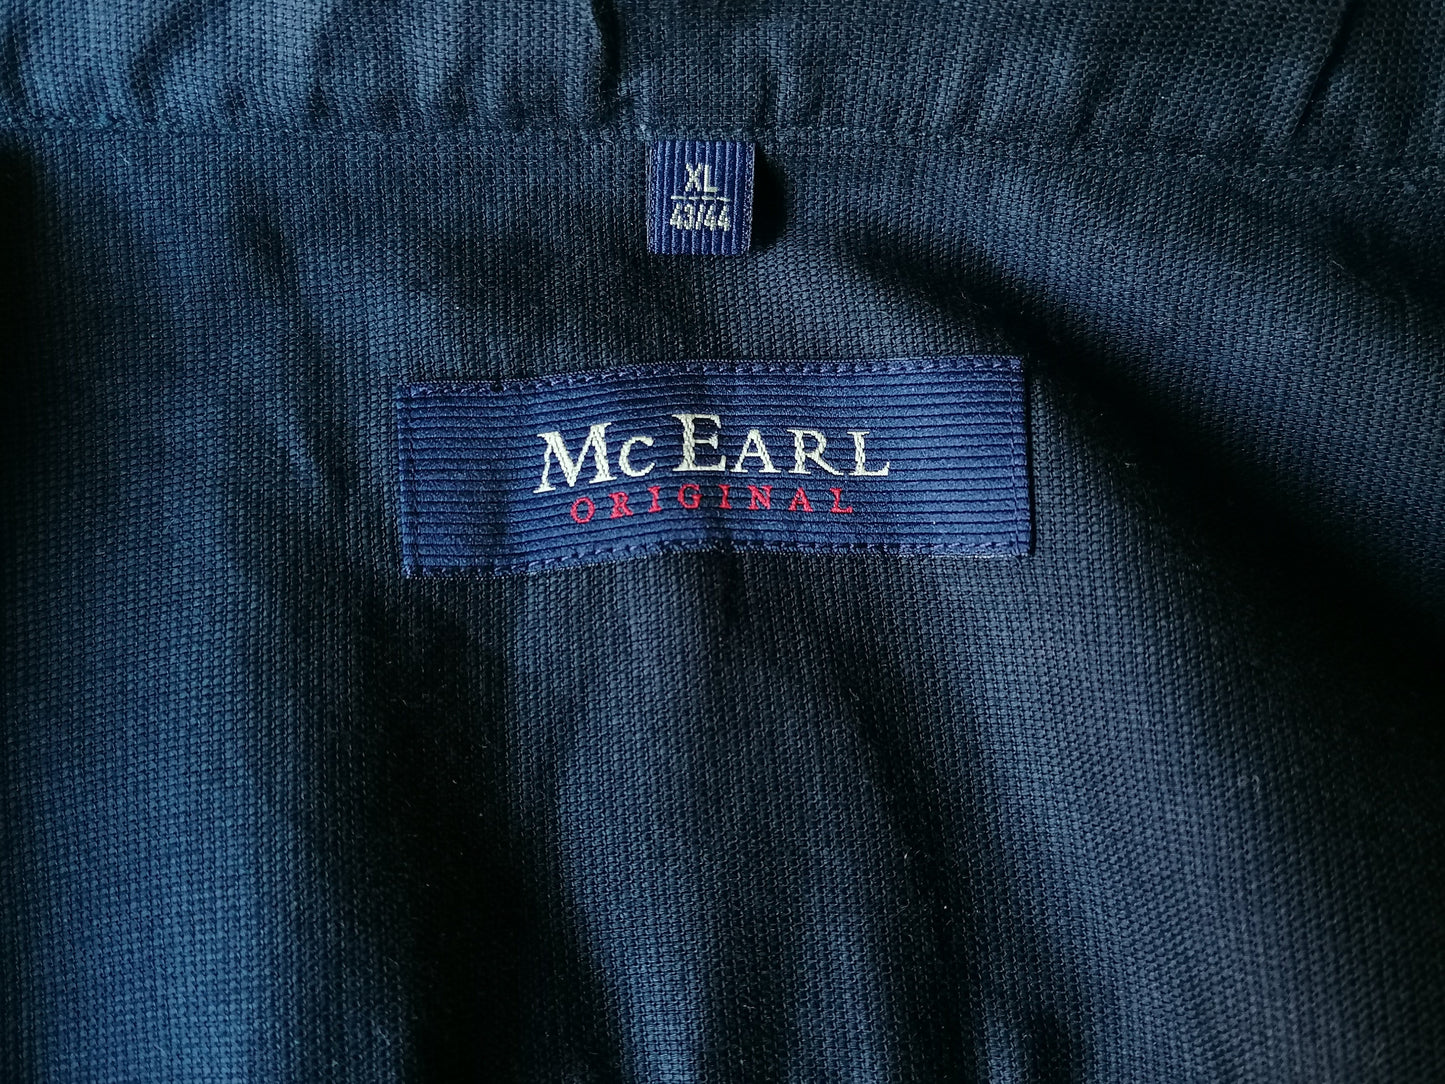 McEarl overhemd met opstaande / farmers / Mao kraag.. Zwart gekleurd. Maat XL - XXL / 2XL.